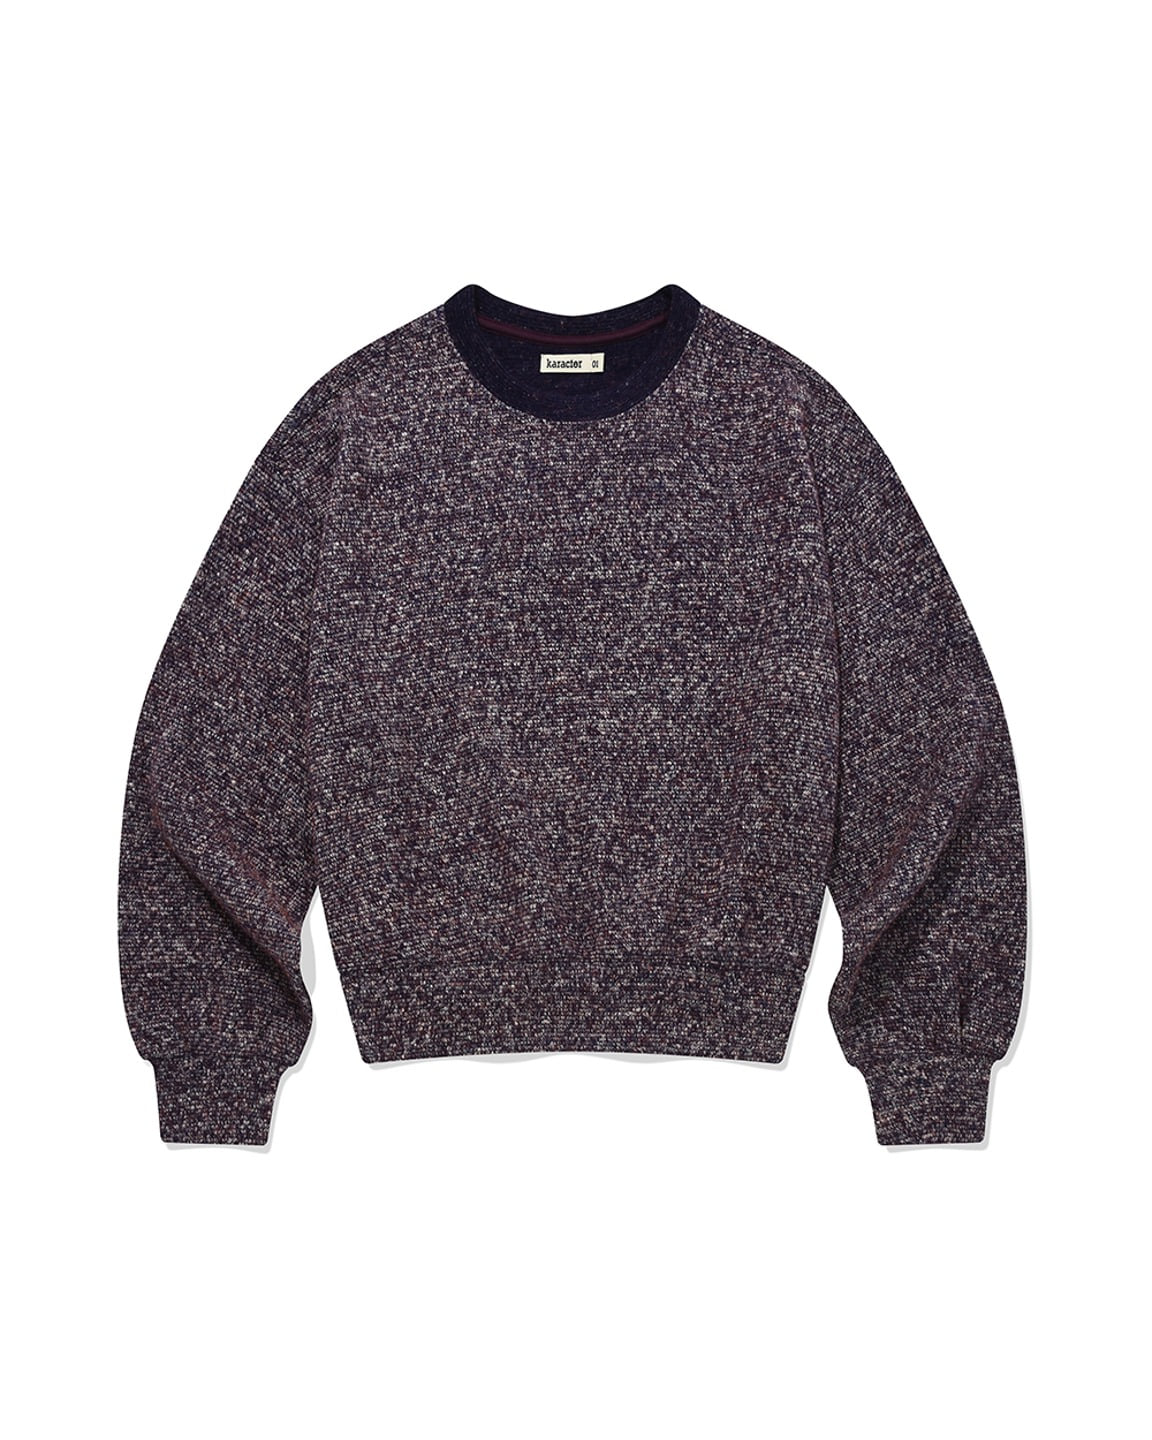 Intarsia wool blended knit / Purple세니틴크